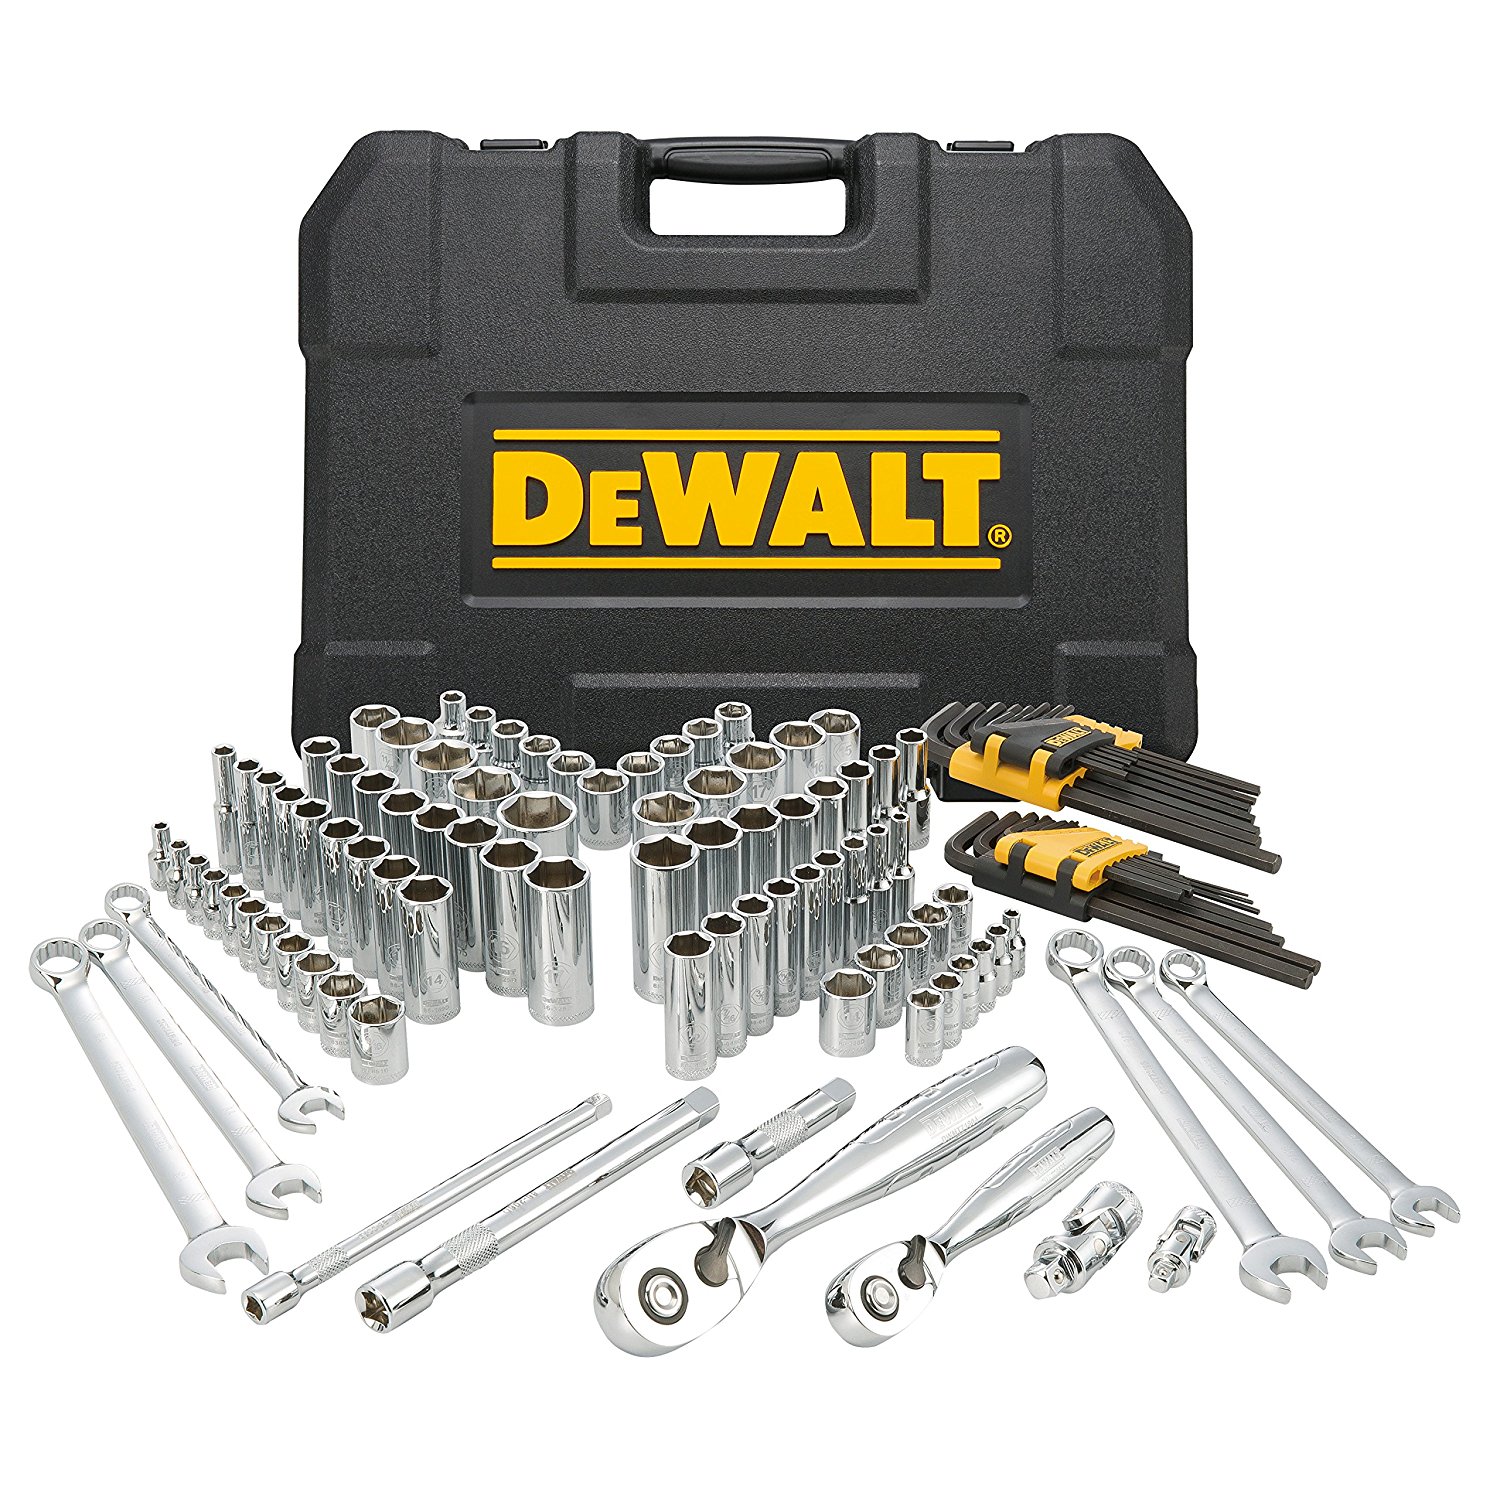 25% off DEWALT Mechanics 118 pc Tool Set – Just $89.75!